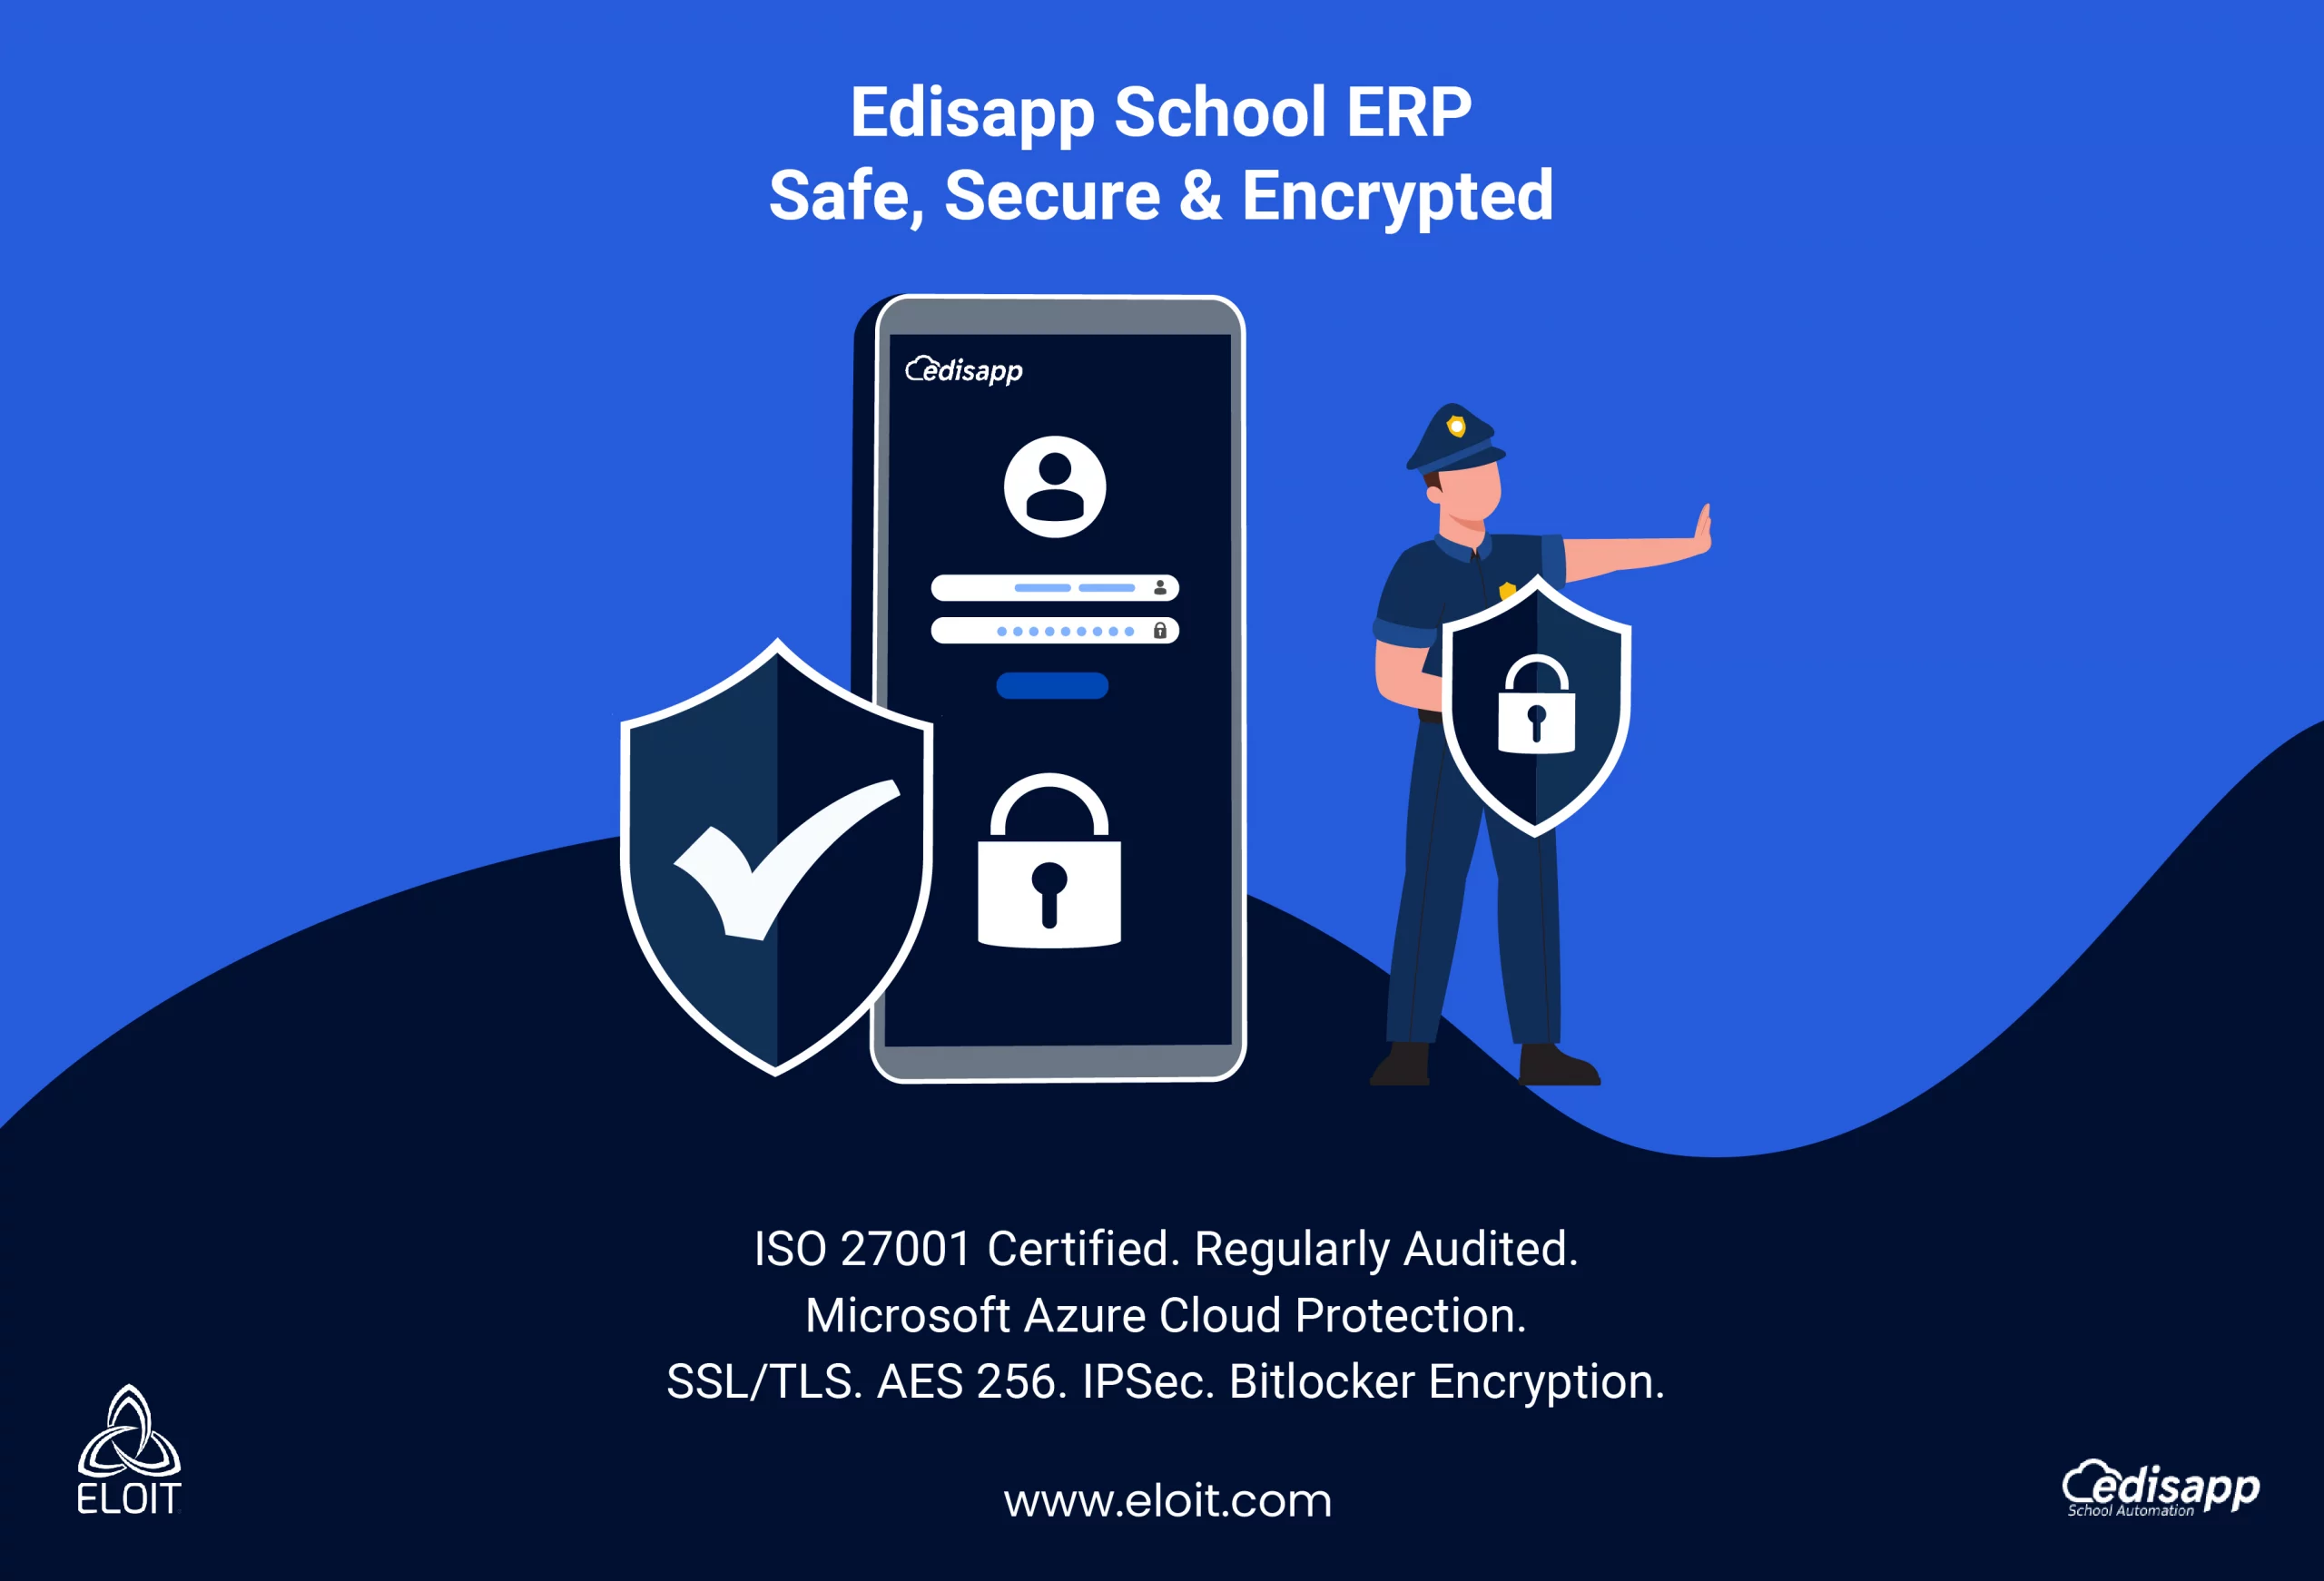 Edisapp School ERP – Focus on Student Data Security